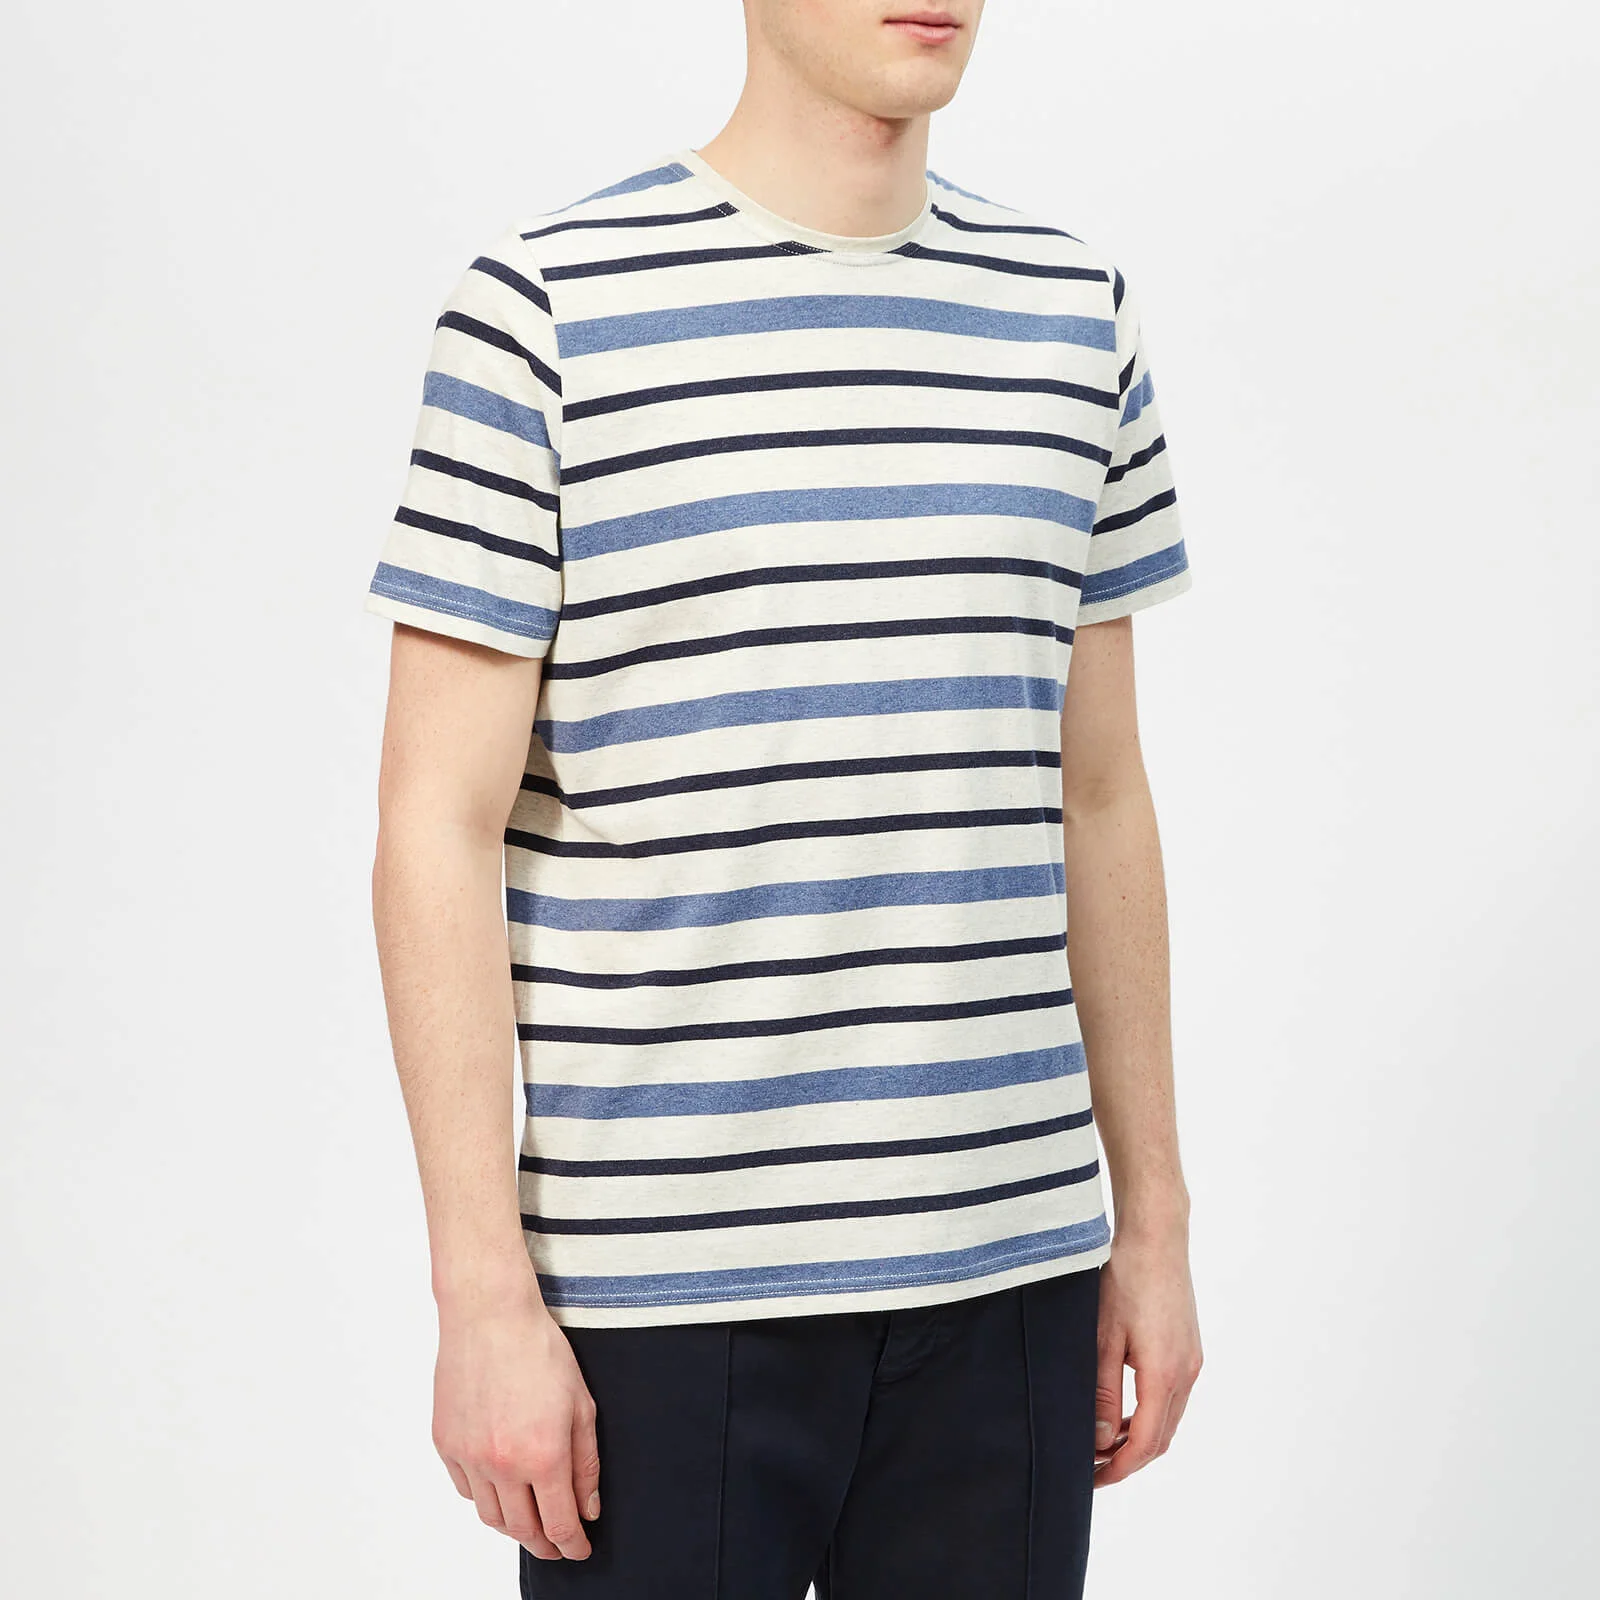 Oliver Spencer Men's Conduit T-Shirt - Caris Blue Image 1